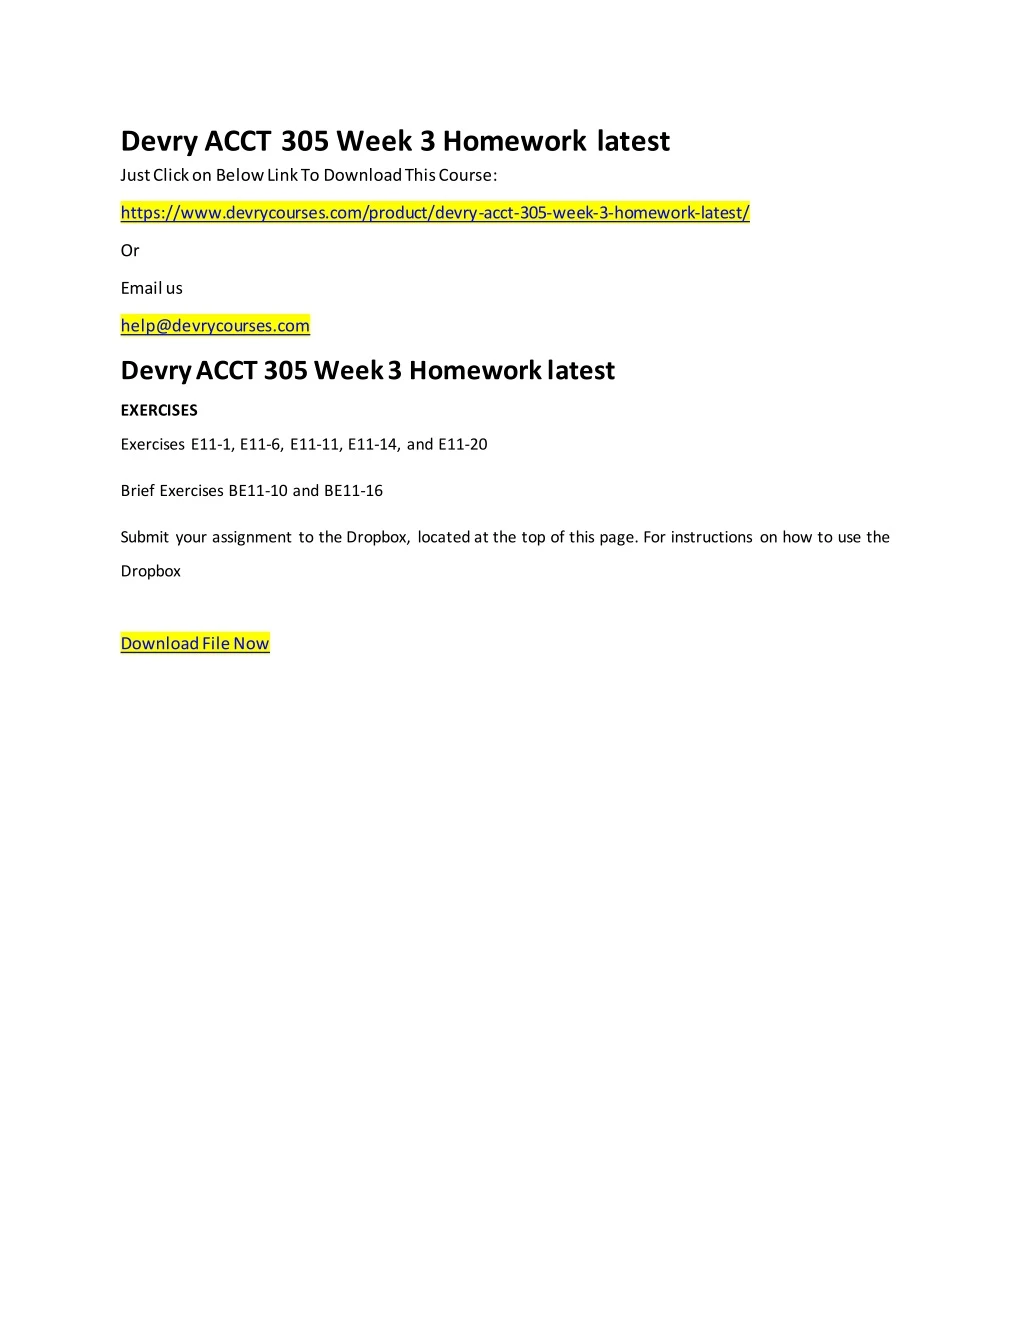 devry acct 305 week 3 homework latest just click